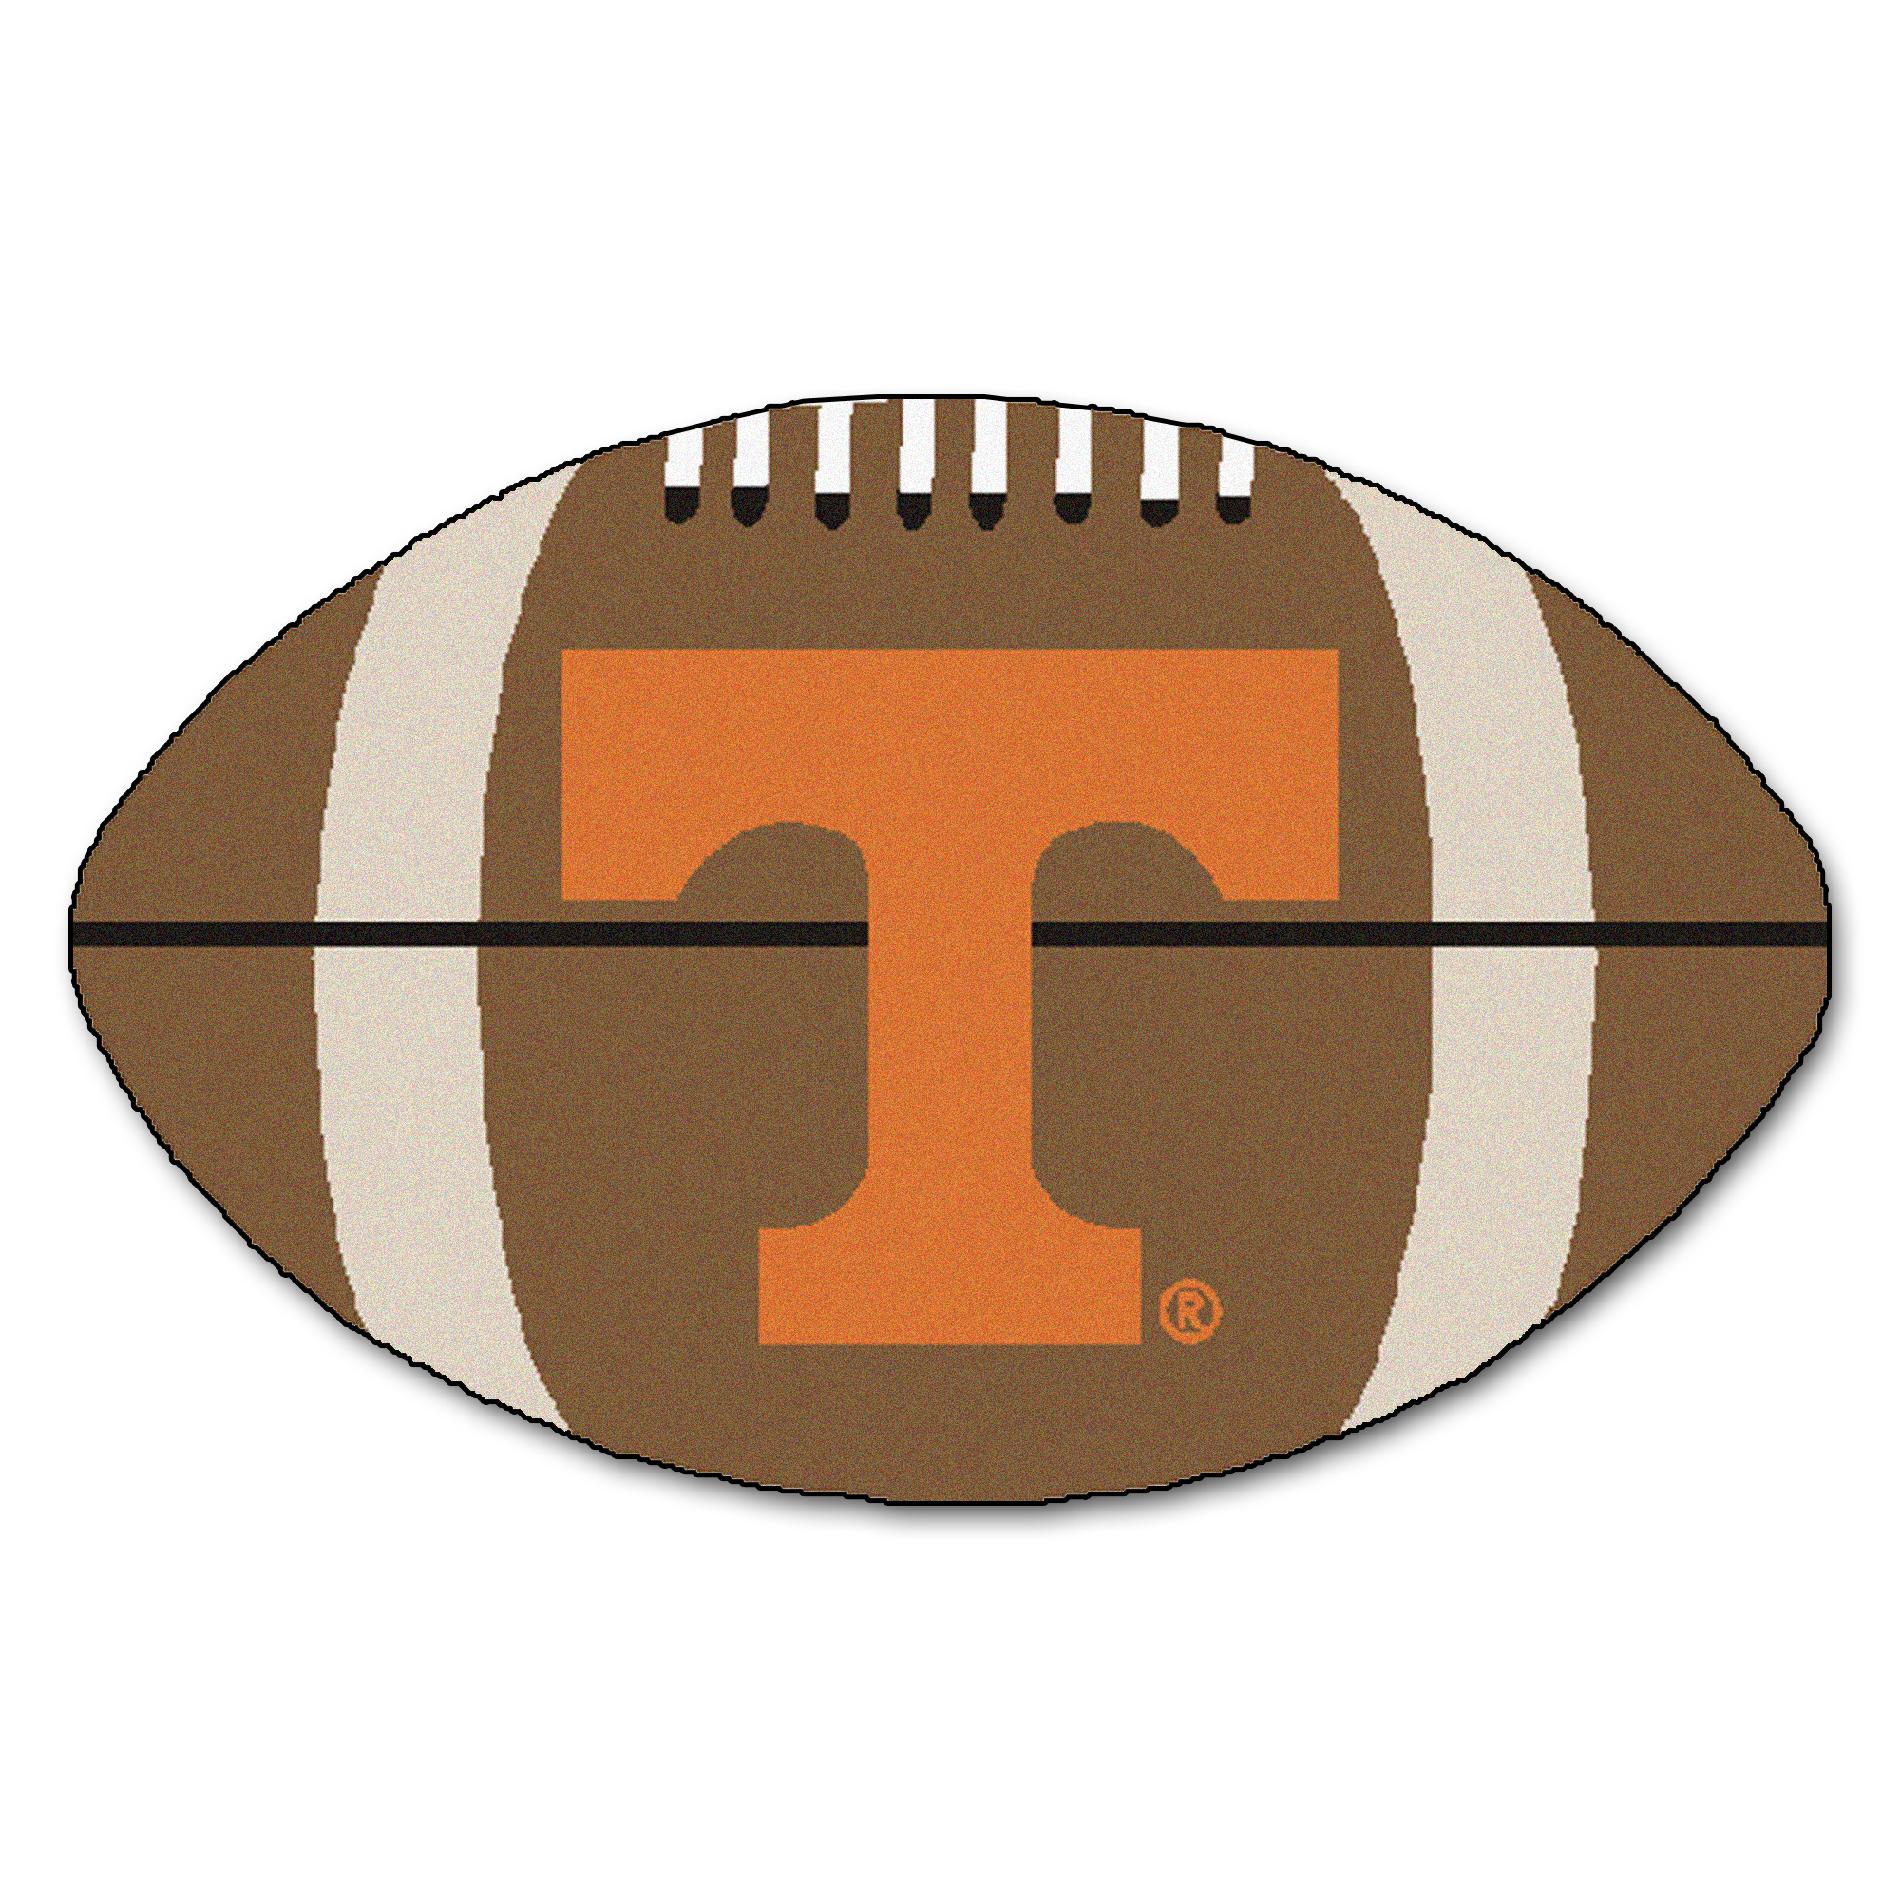 Tennessee Football Rug 22" x 35"